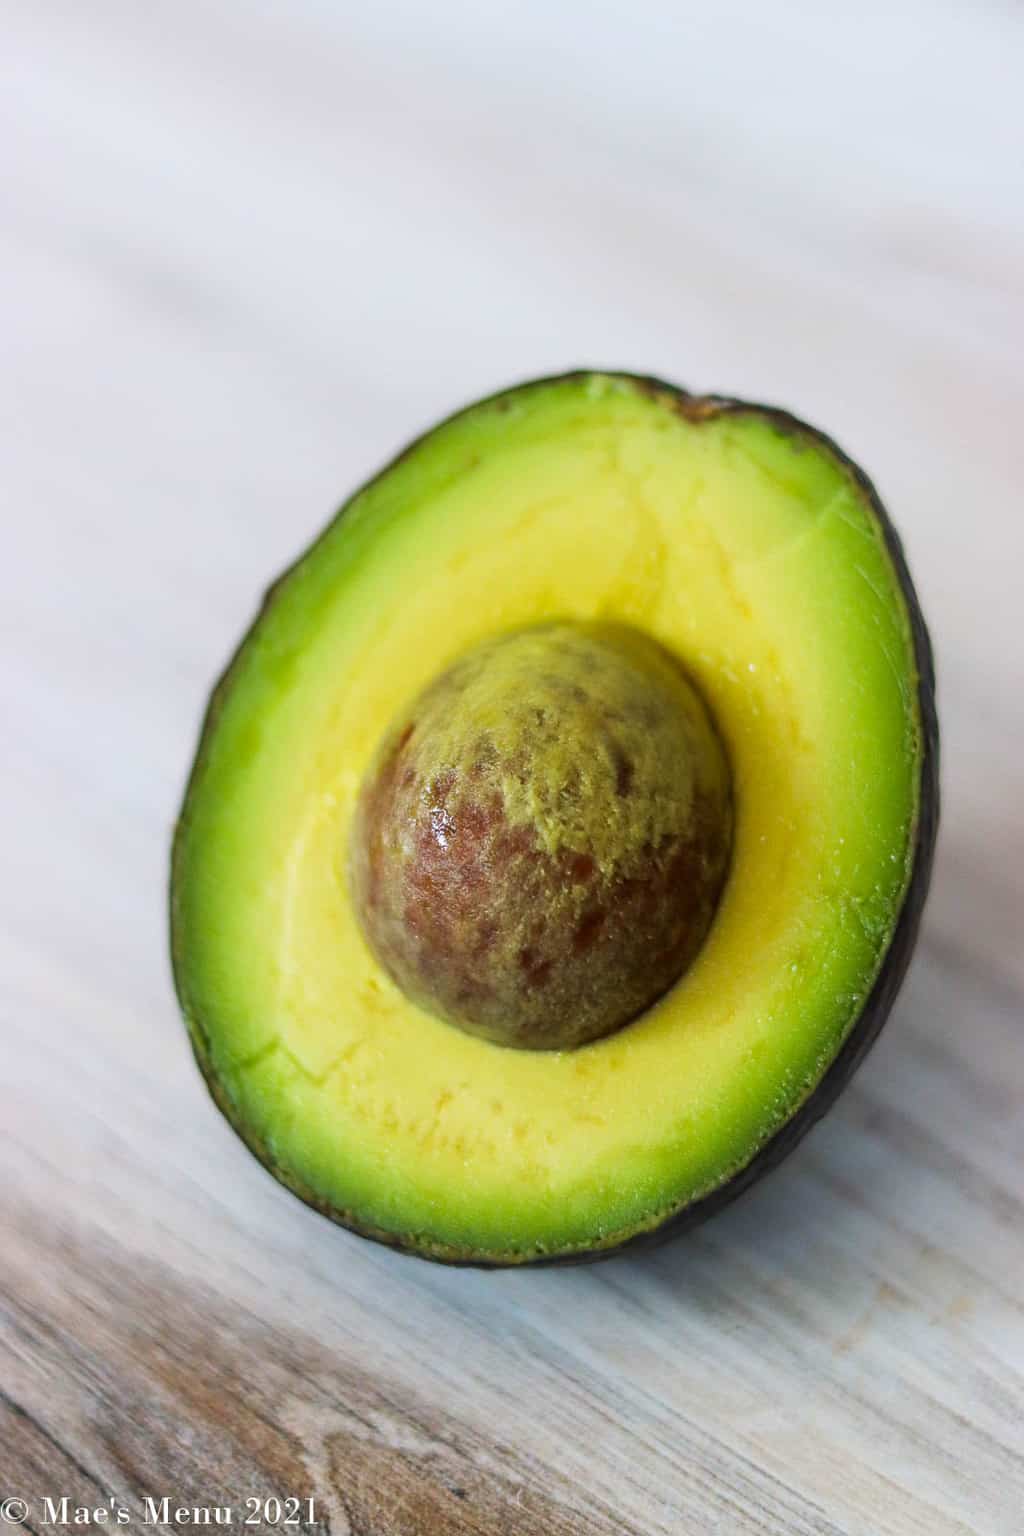 A side shot of a halved avocado